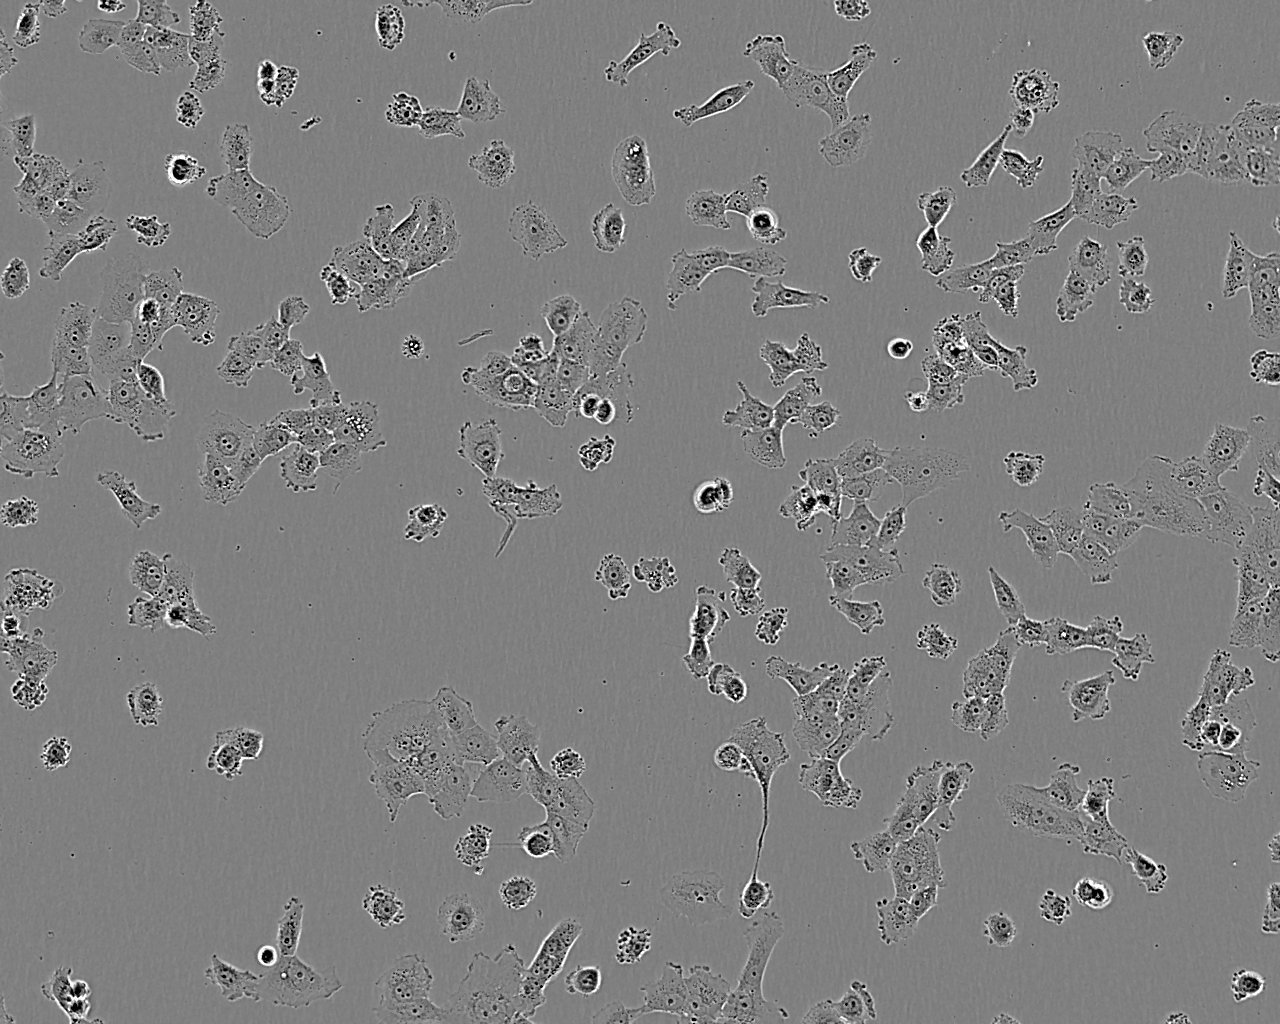 JKT-1 epithelioid cells人精原瘤细胞系,JKT-1 epithelioid cell